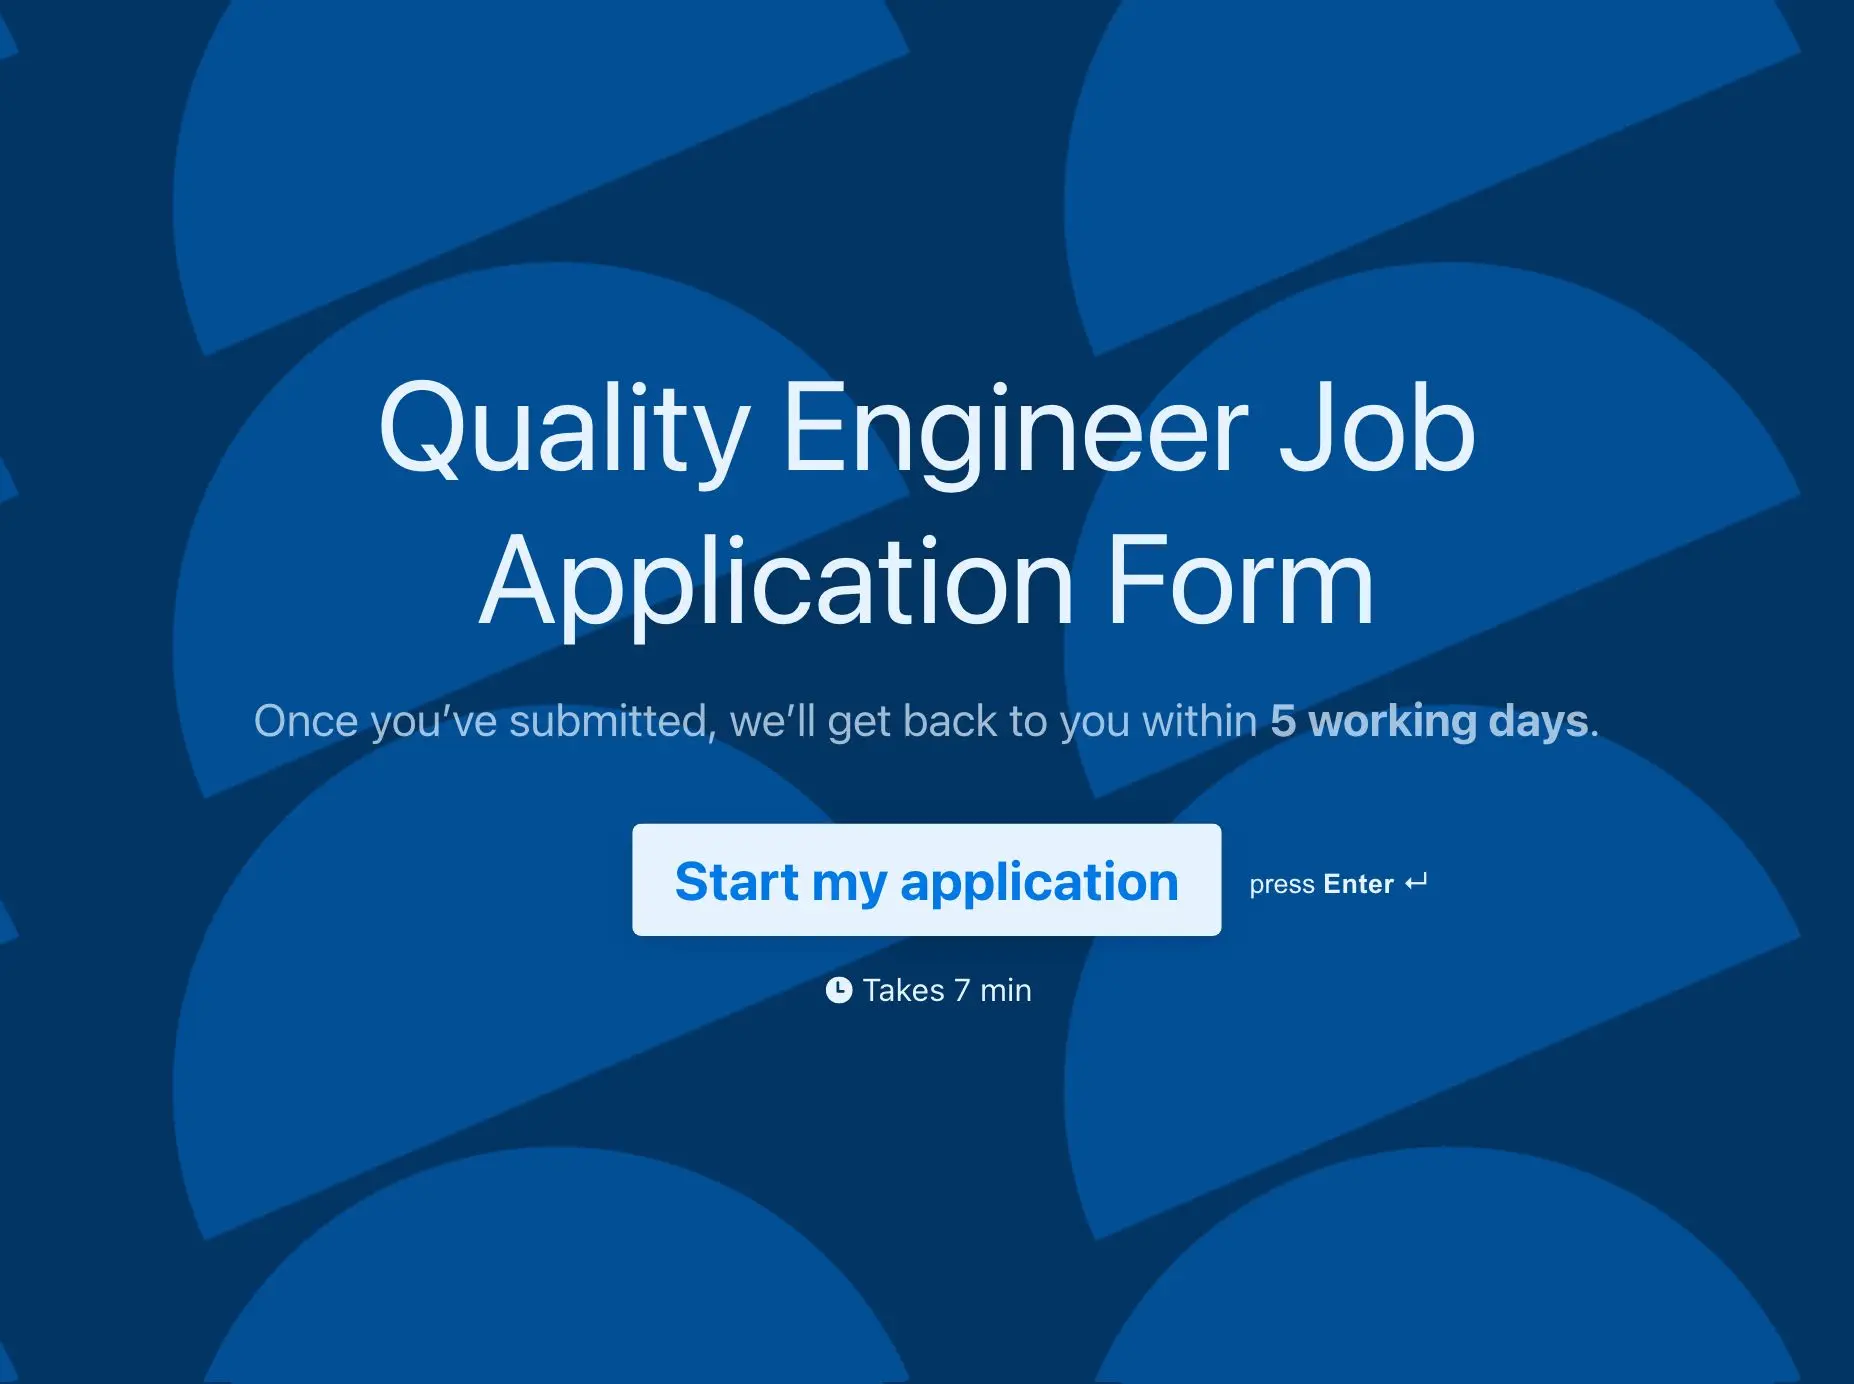 Quality Engineer Job Application Form Template Hero